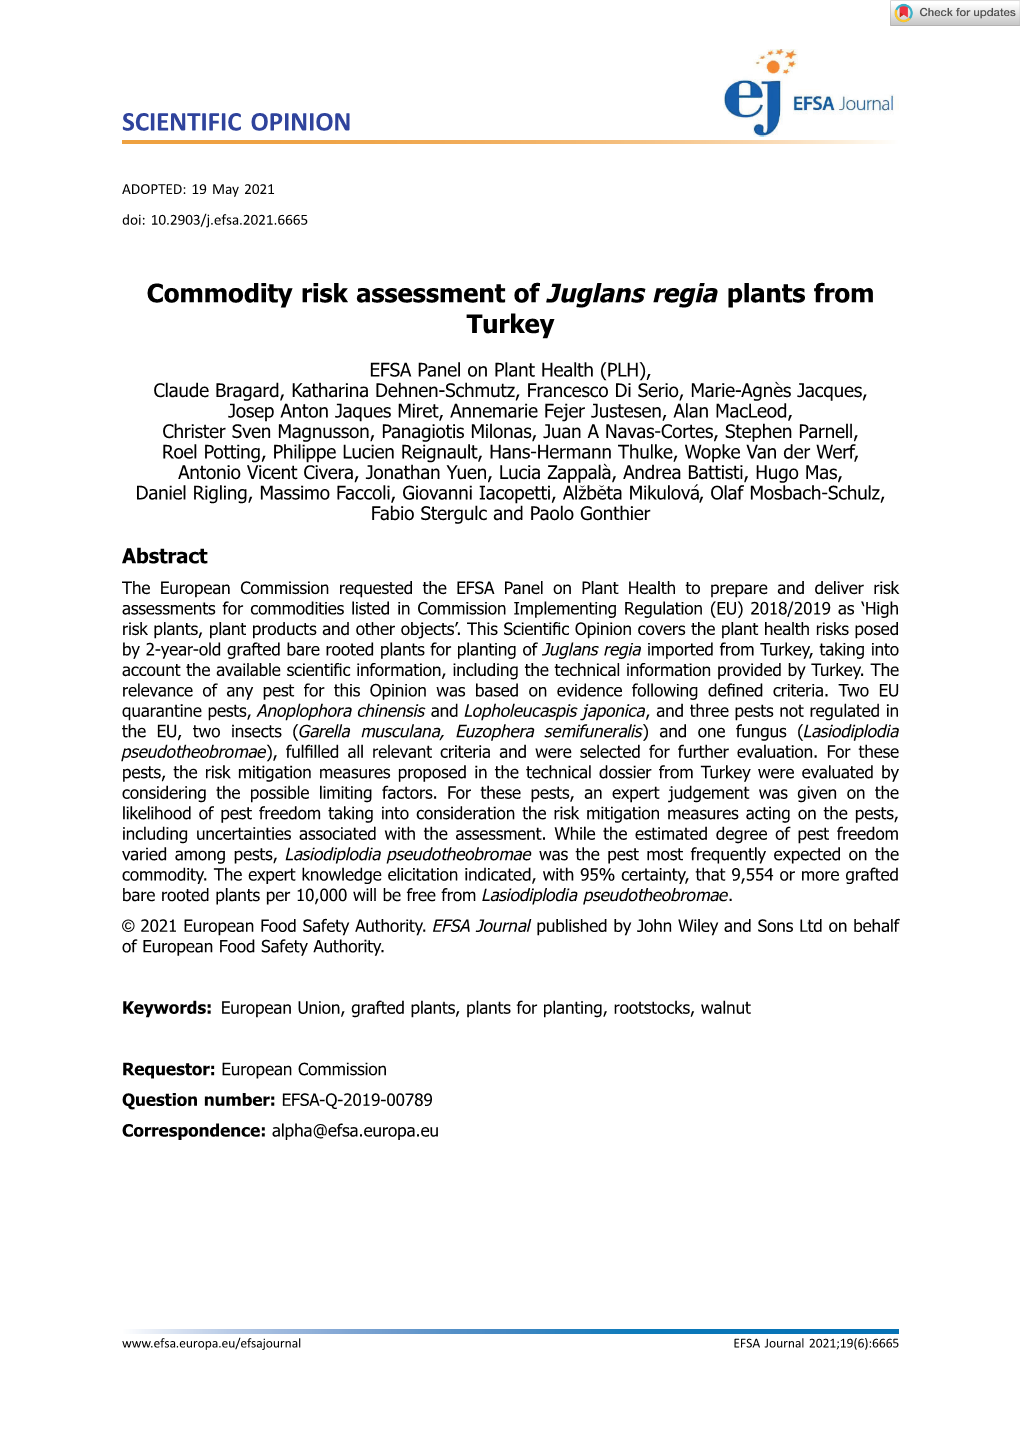 Commodity Risk Assessment of Juglans Regia Plants from Turkey